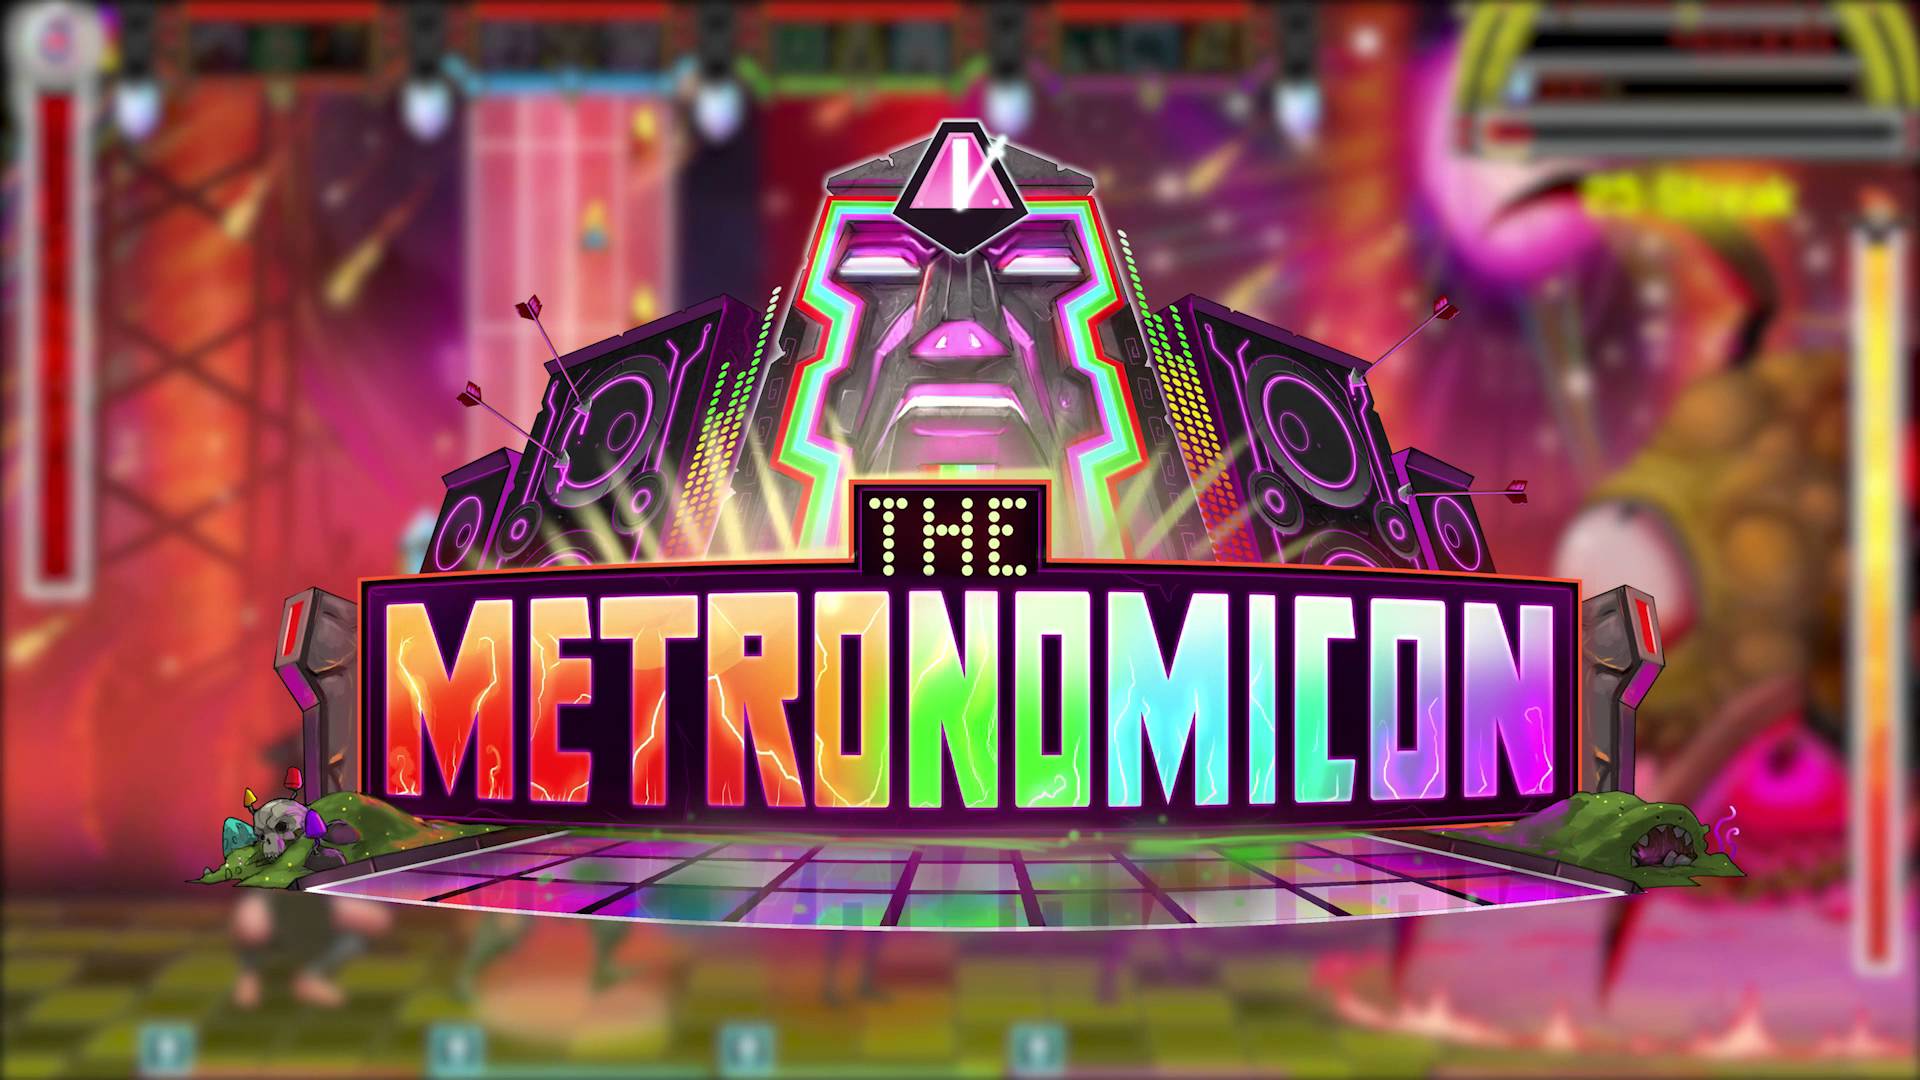 Metronomicon